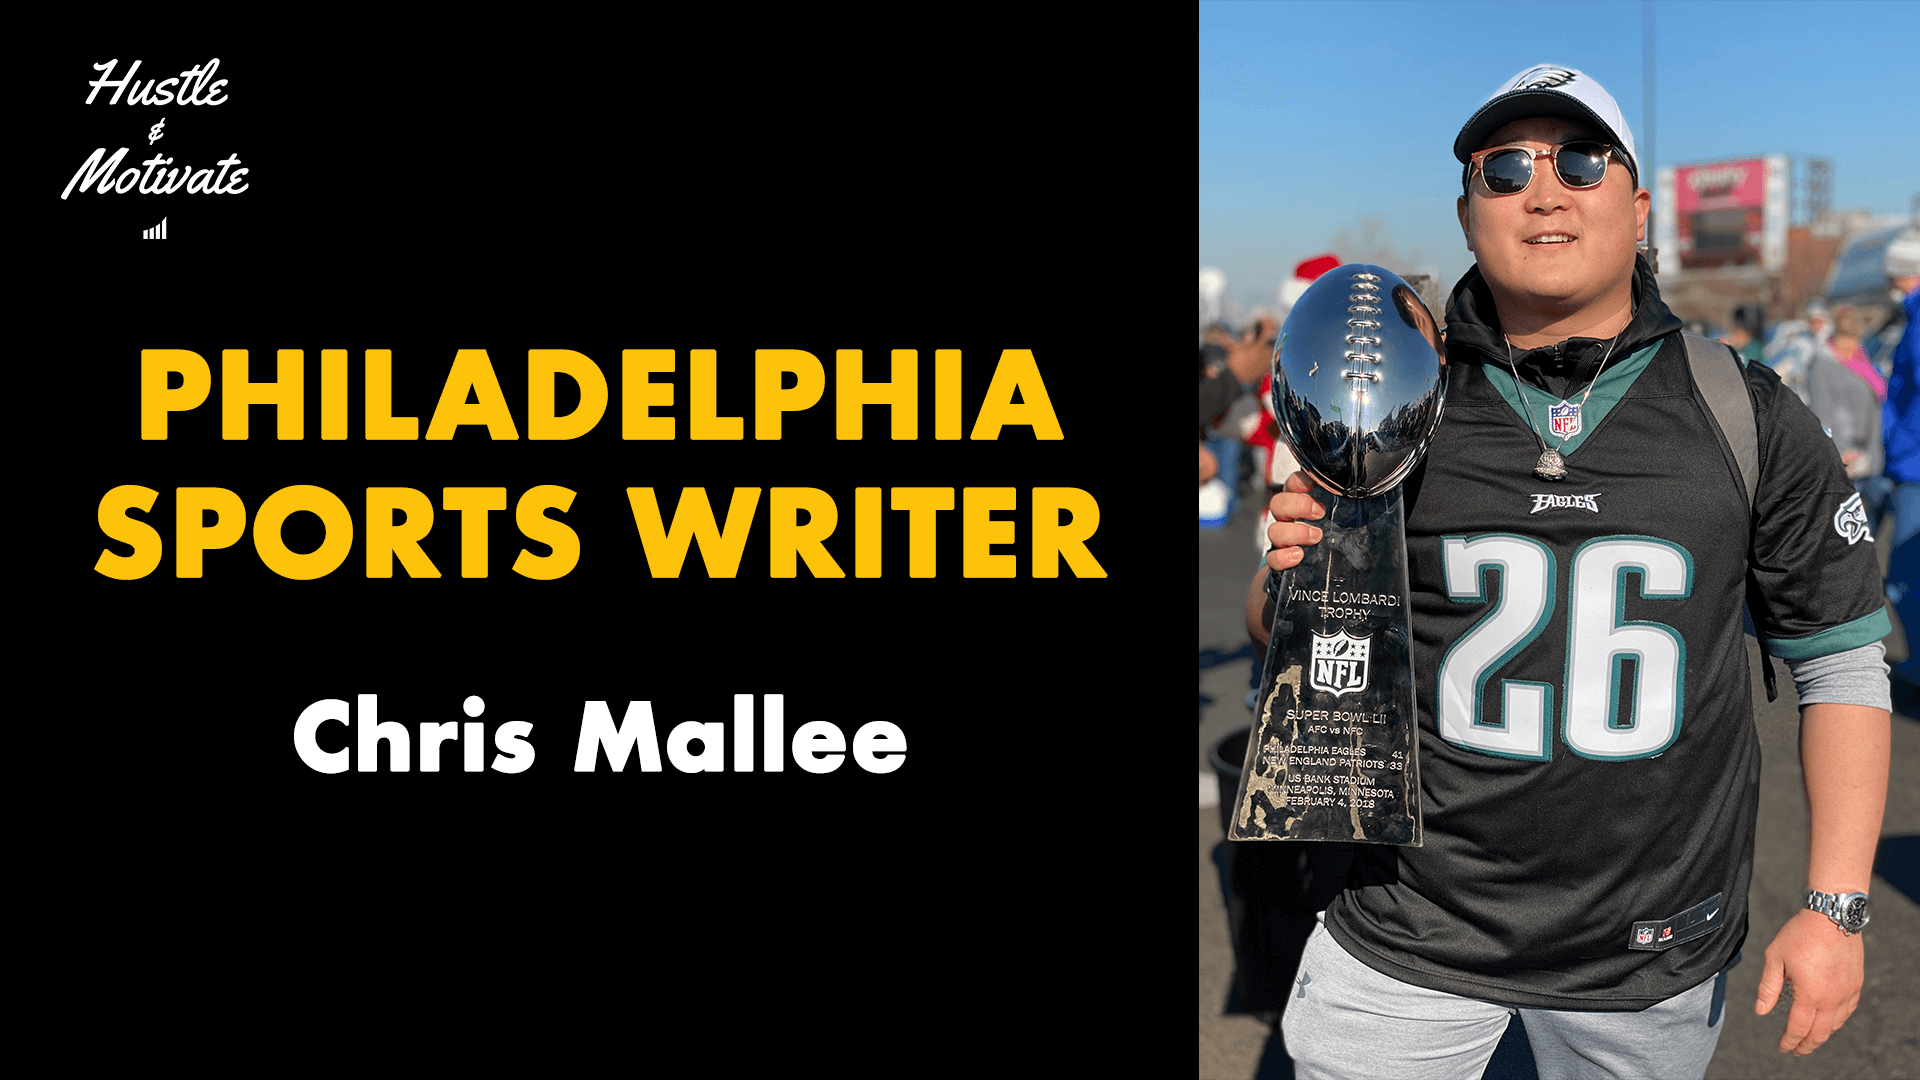 Chris Mallee, a Philadelphia sports writer, joins the Hustle & Motivate podcast, presented by Joker Mag